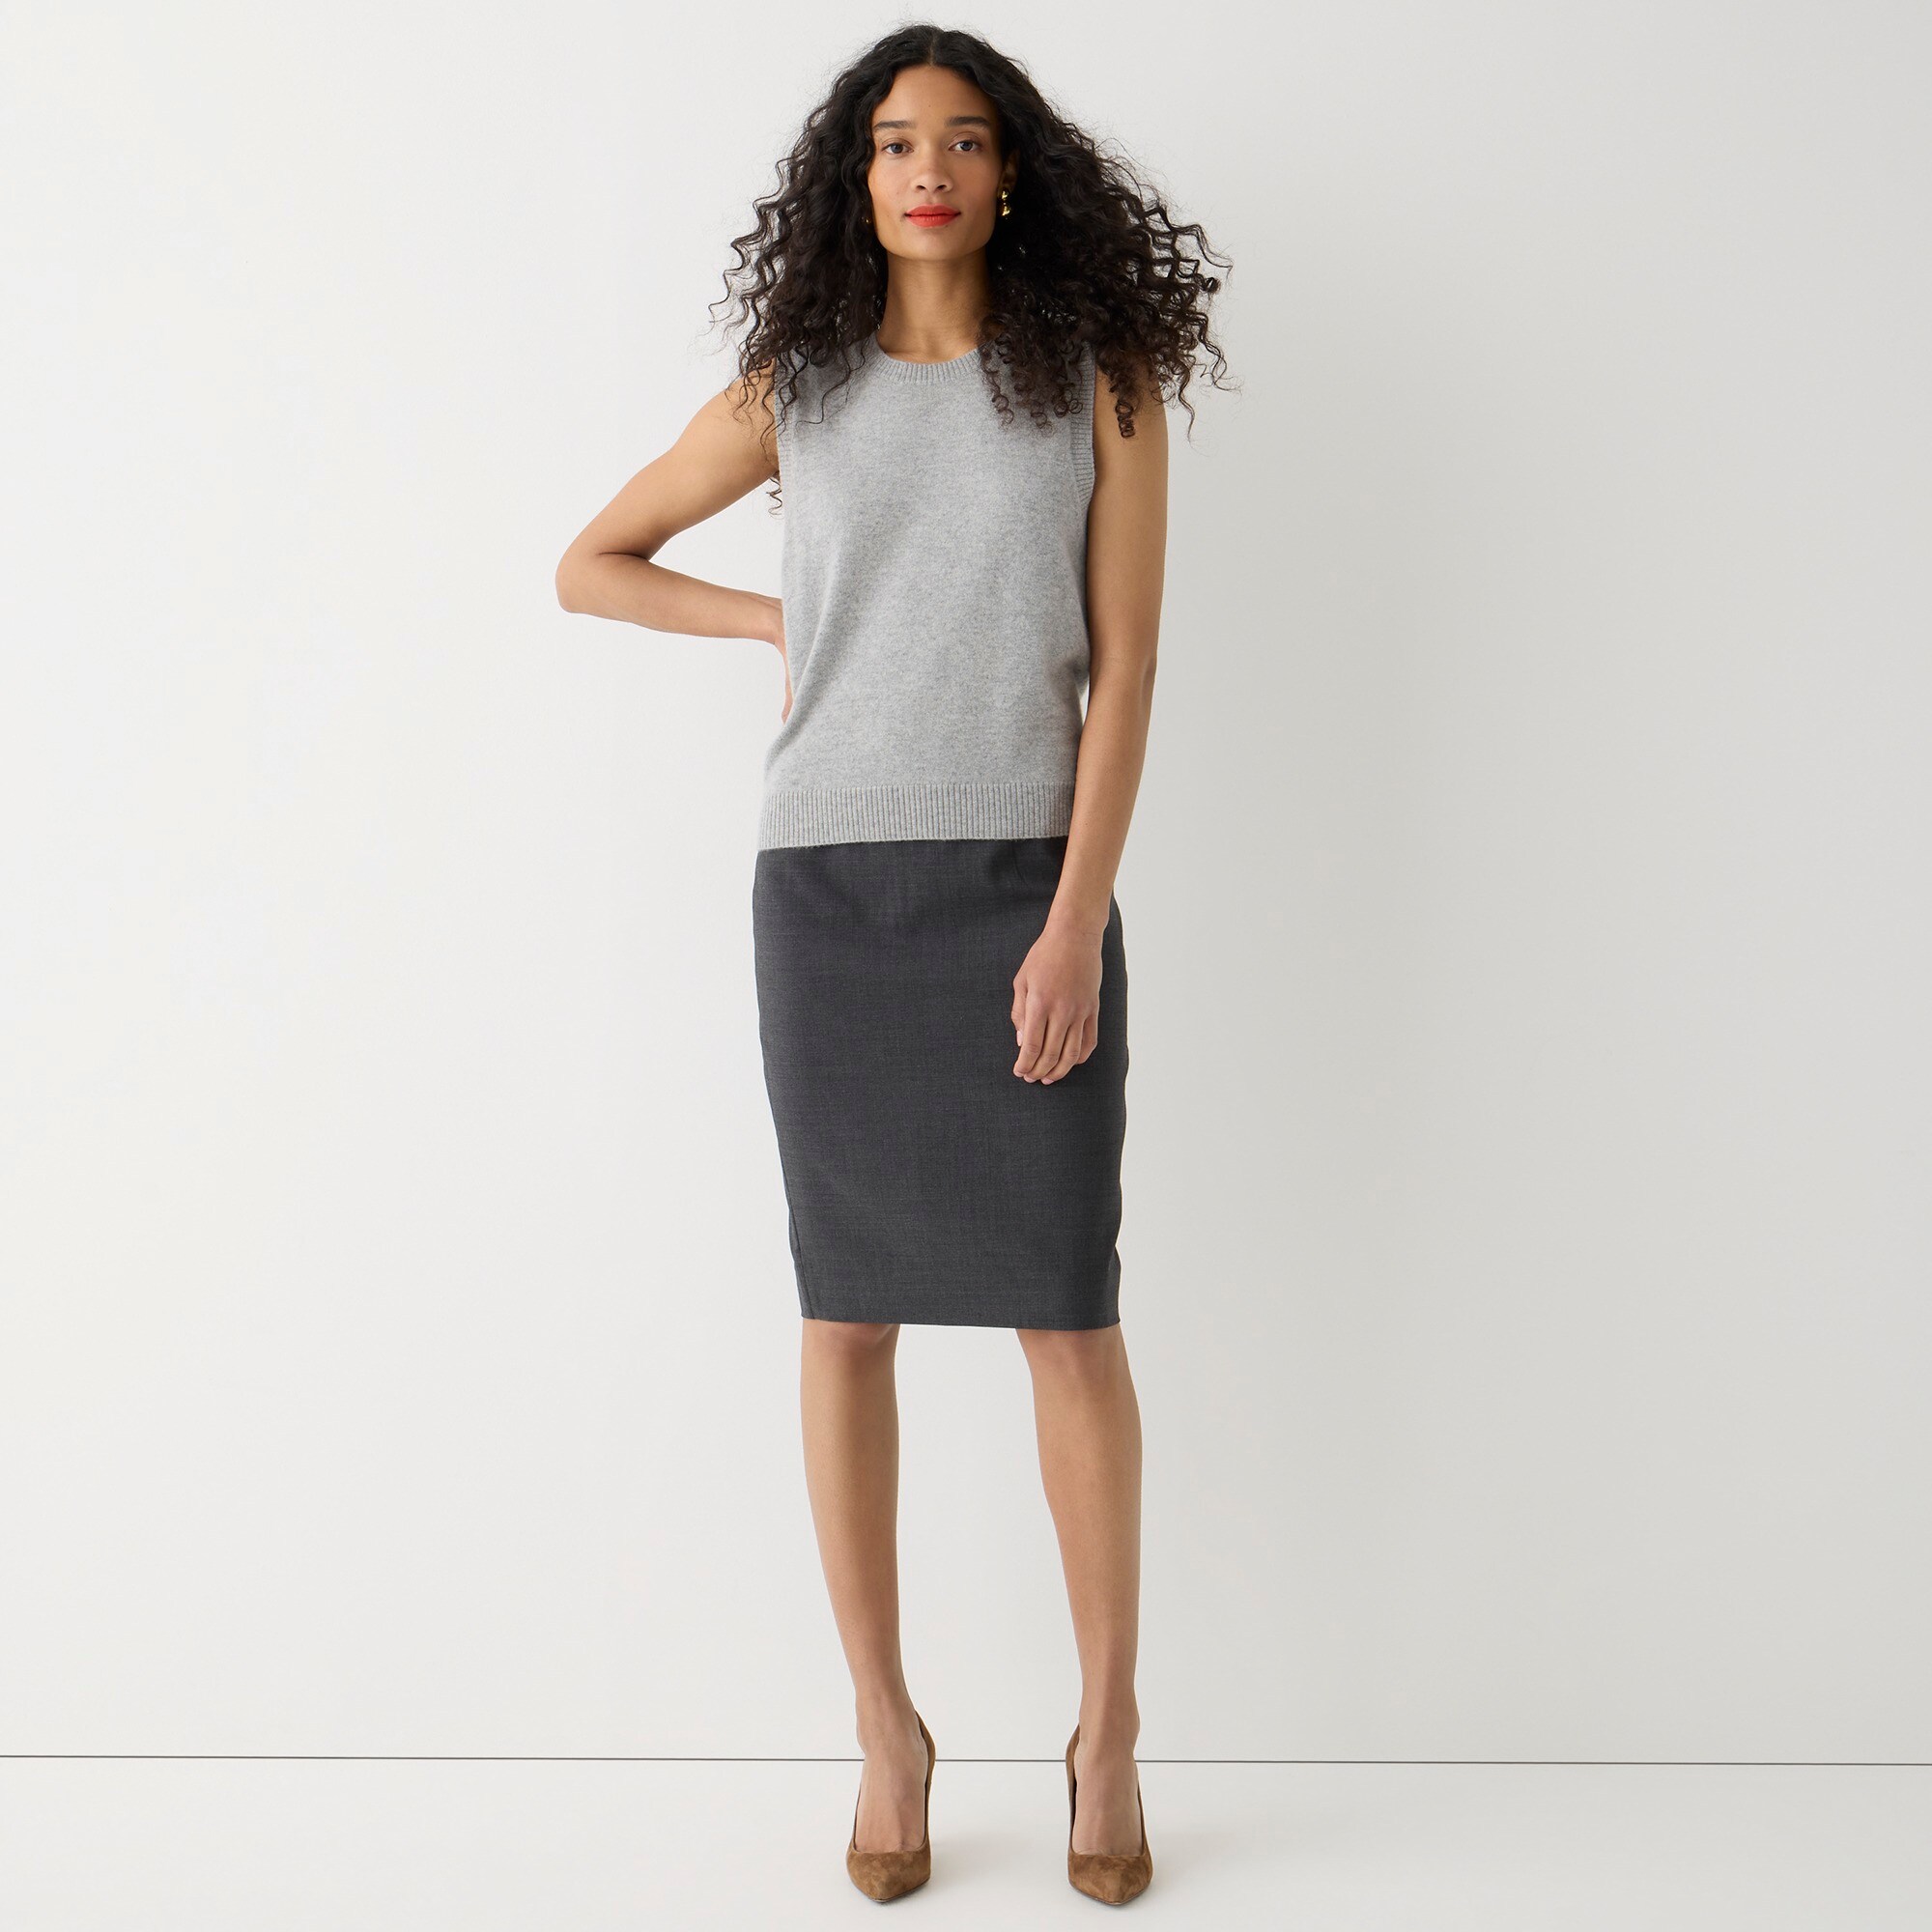  Petite No. 2 Pencil&reg; skirt in Italian stretch wool